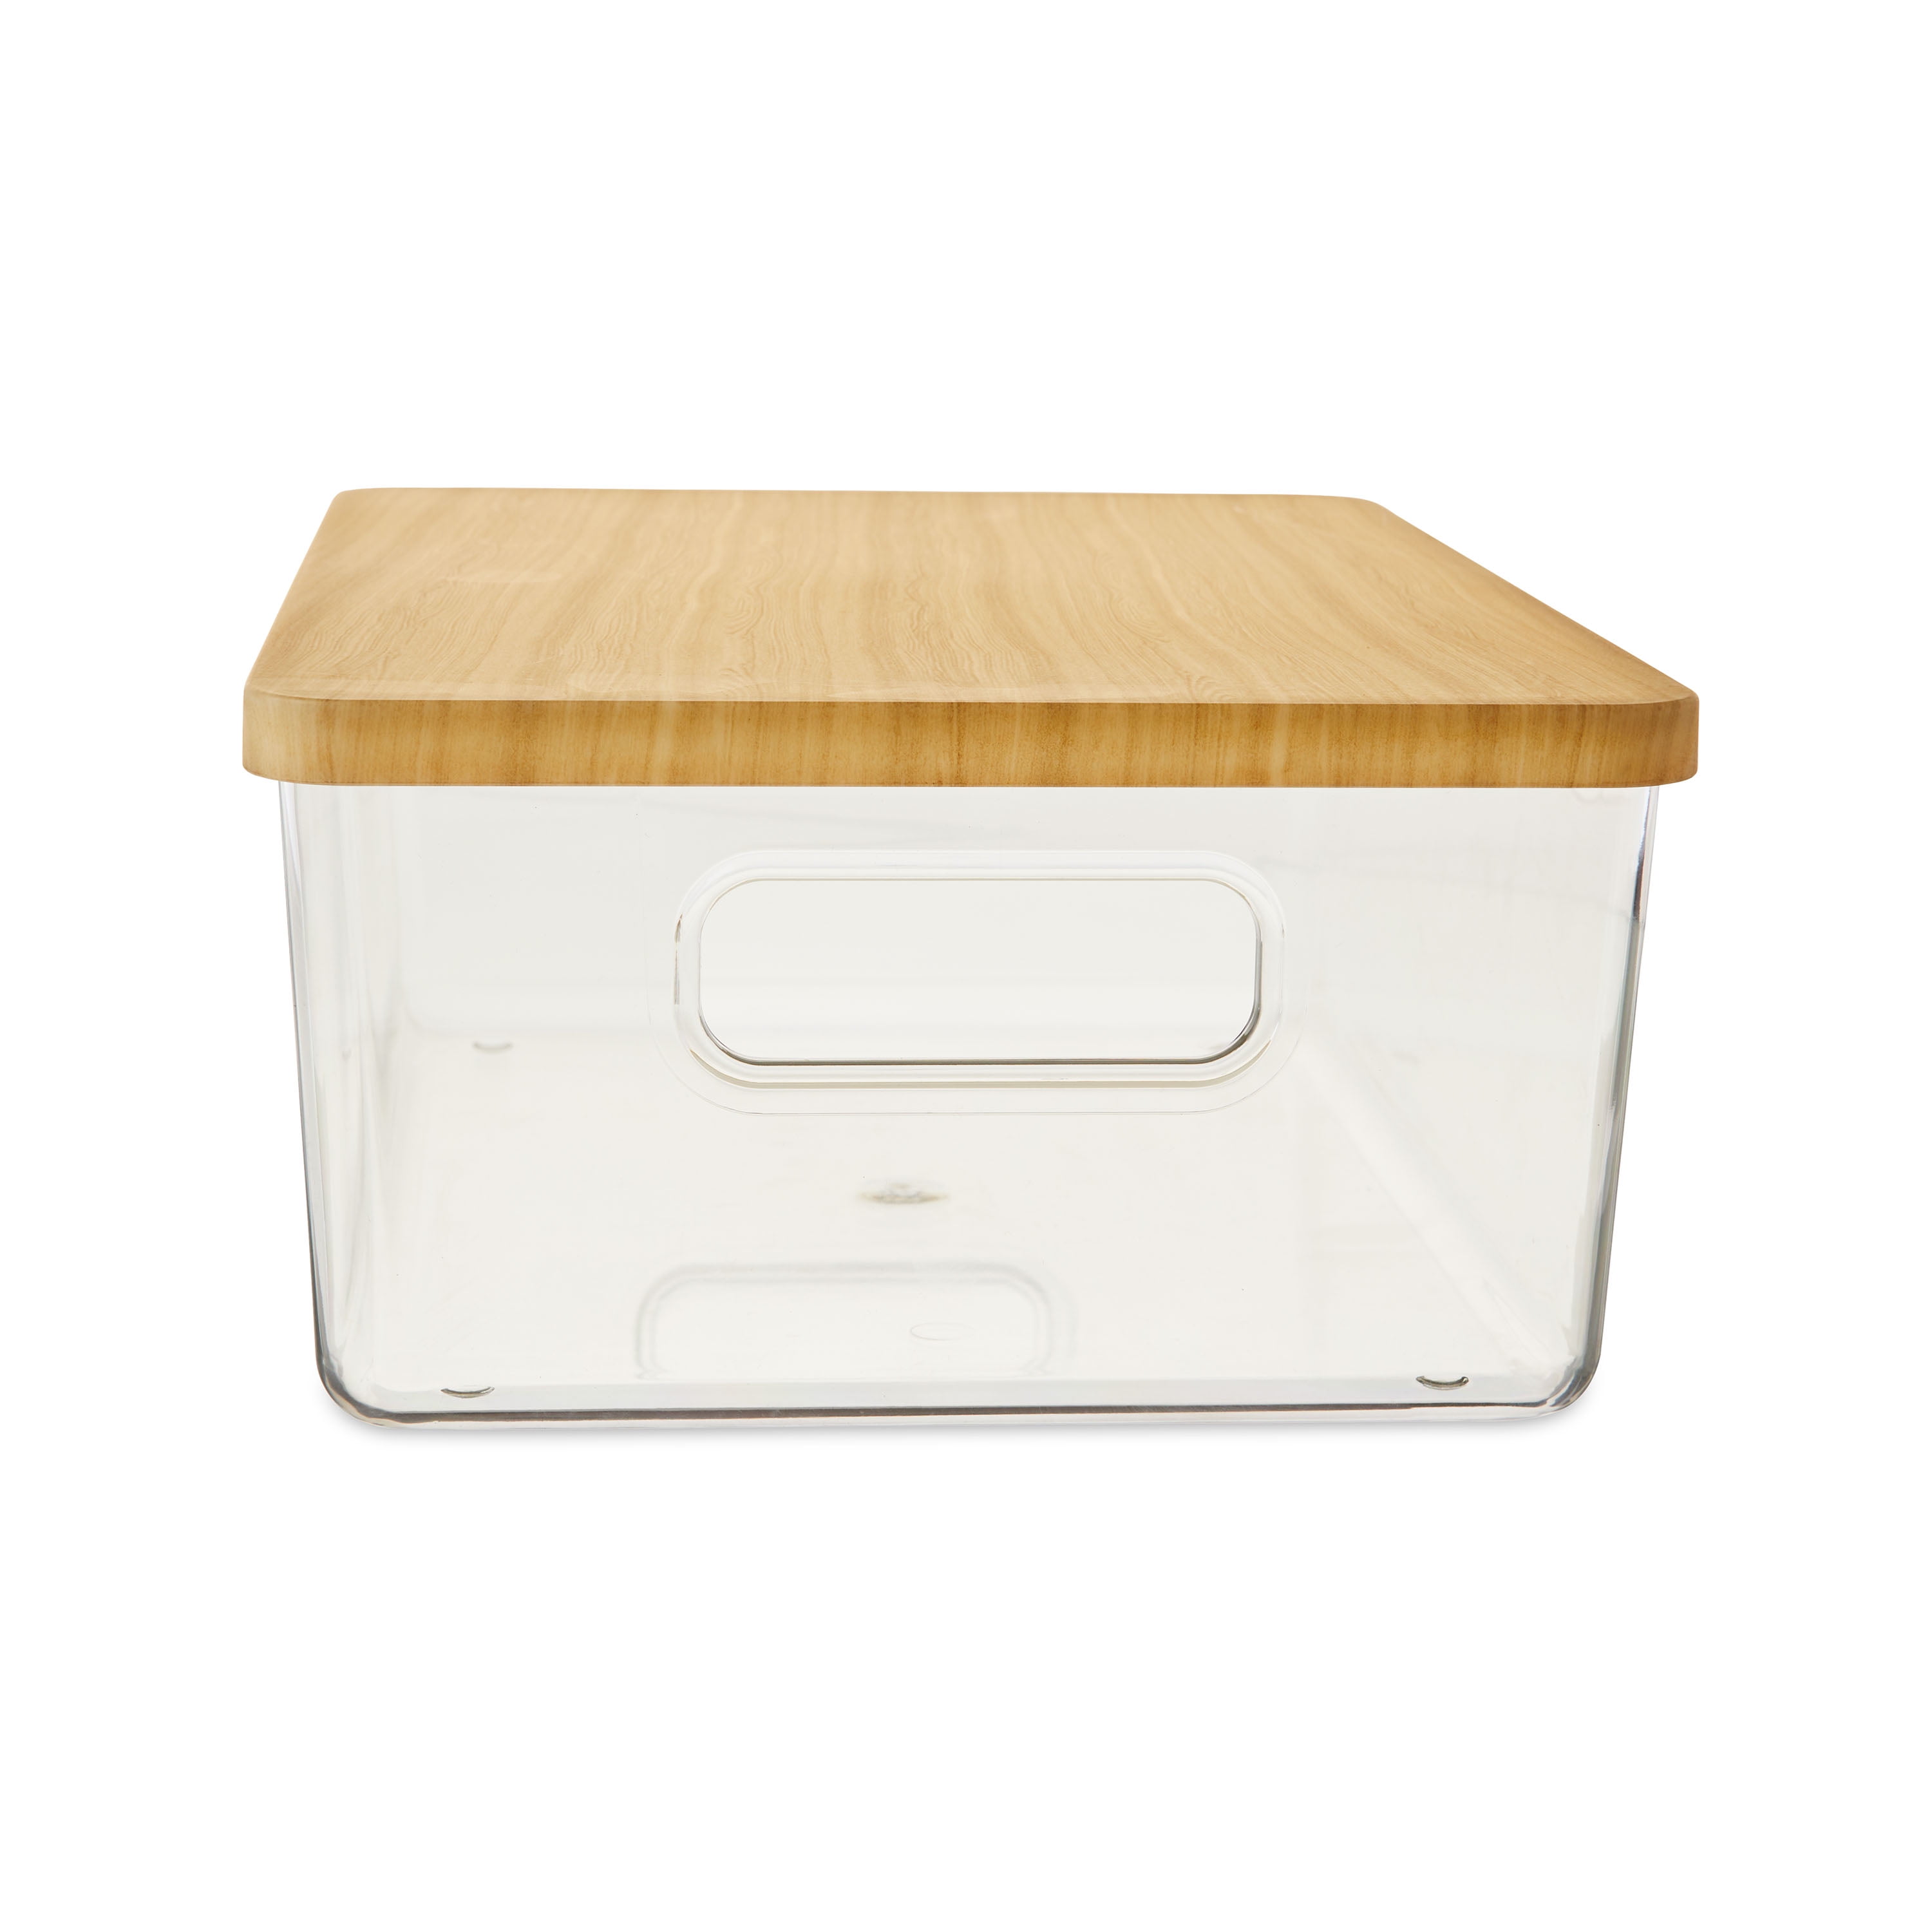 Pen+Gear Organizational Storage Box with Woodgrain Pattern Lid, Silver Gray  